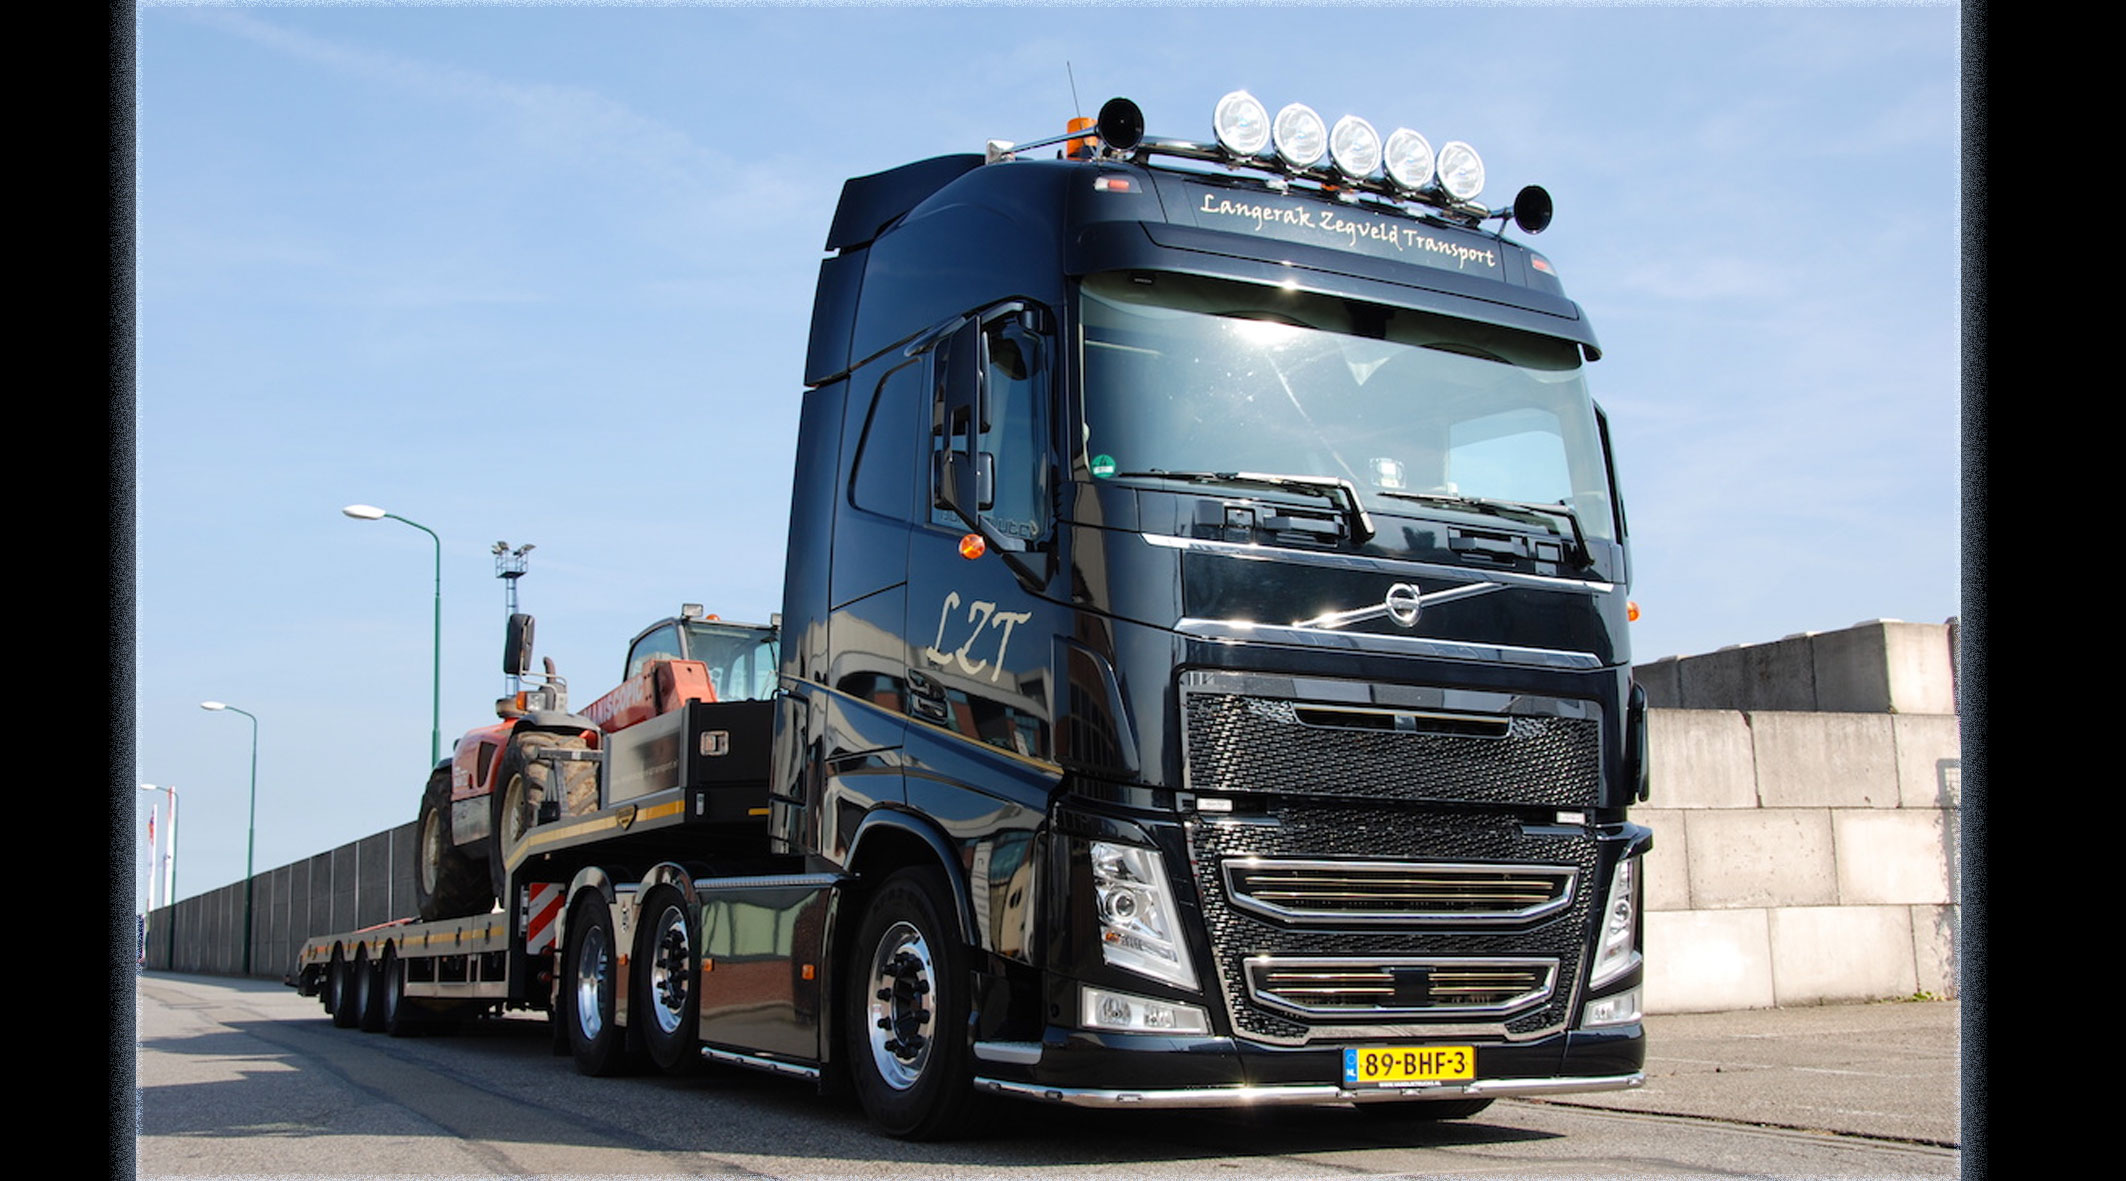 Truck Langerak Zegveld Transport